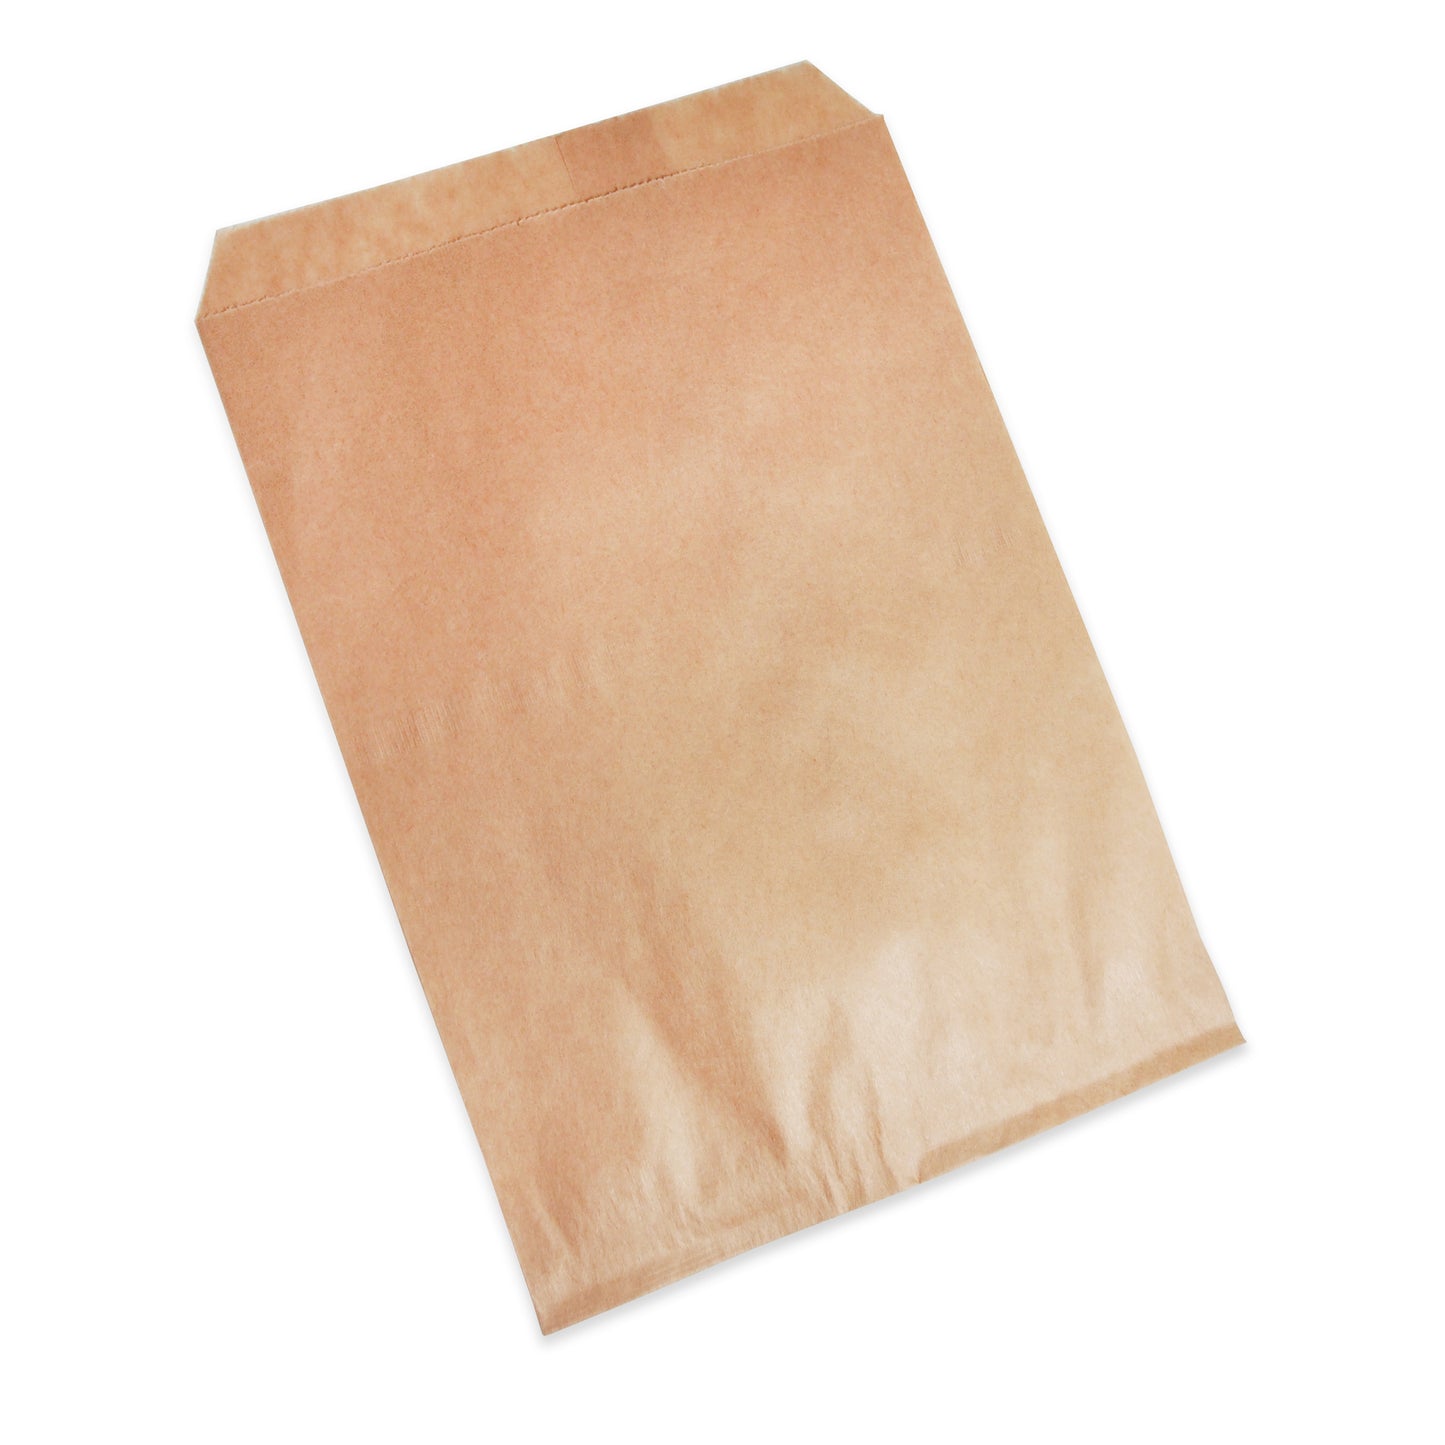 Plain White or Brown Kraft Paper Bags - 100Bags/Pack - Multiple Sizes